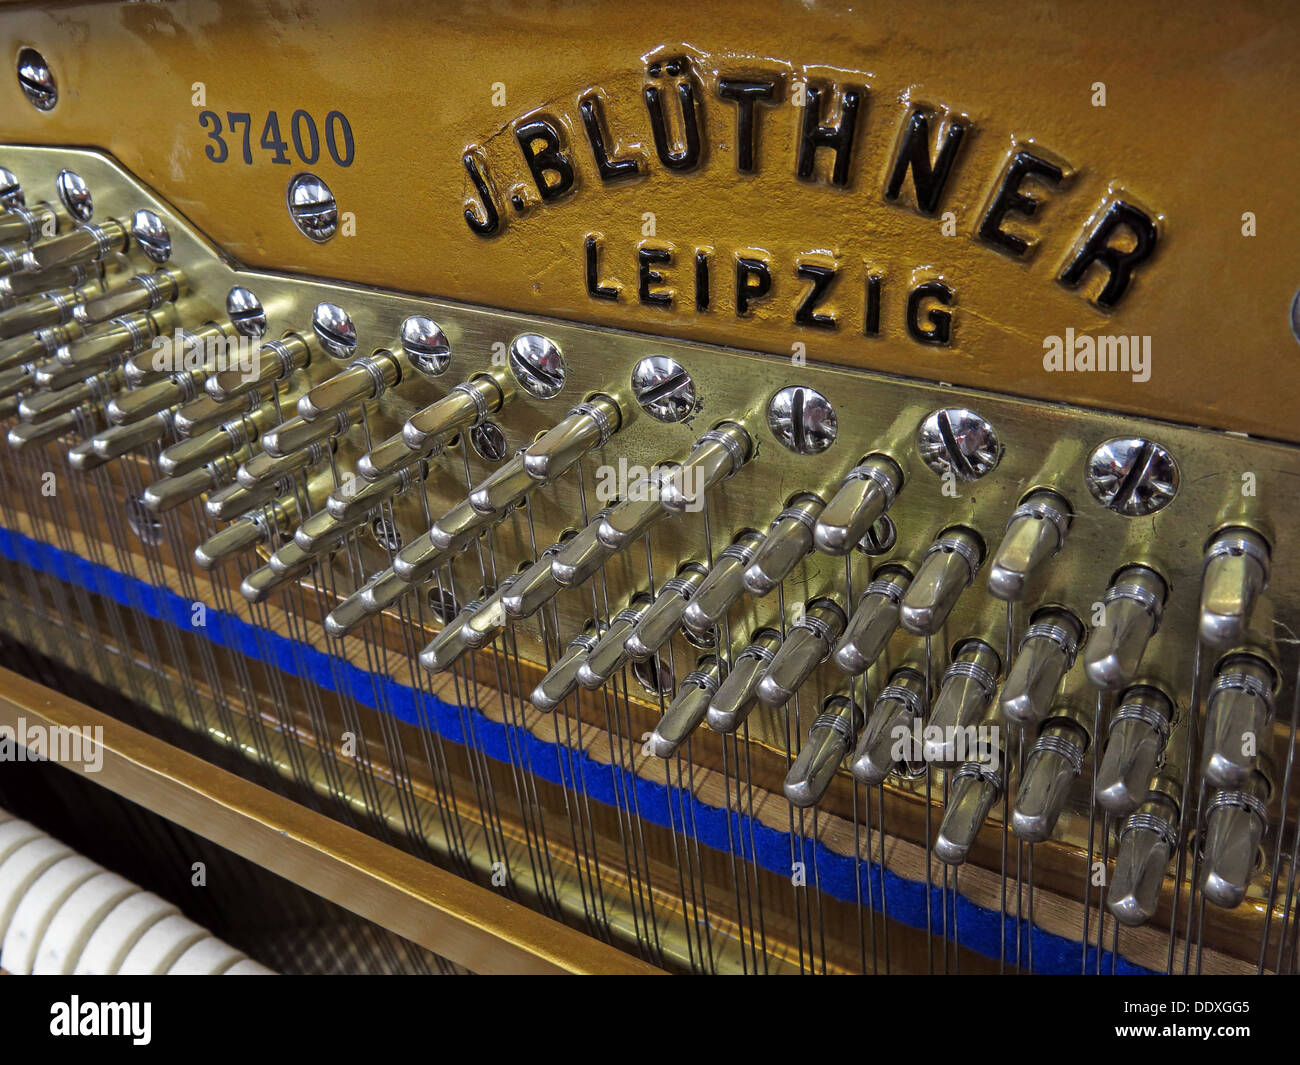 Ripristinato J. Bluthner Leipzig Germania pianoforte 37400 Foto Stock